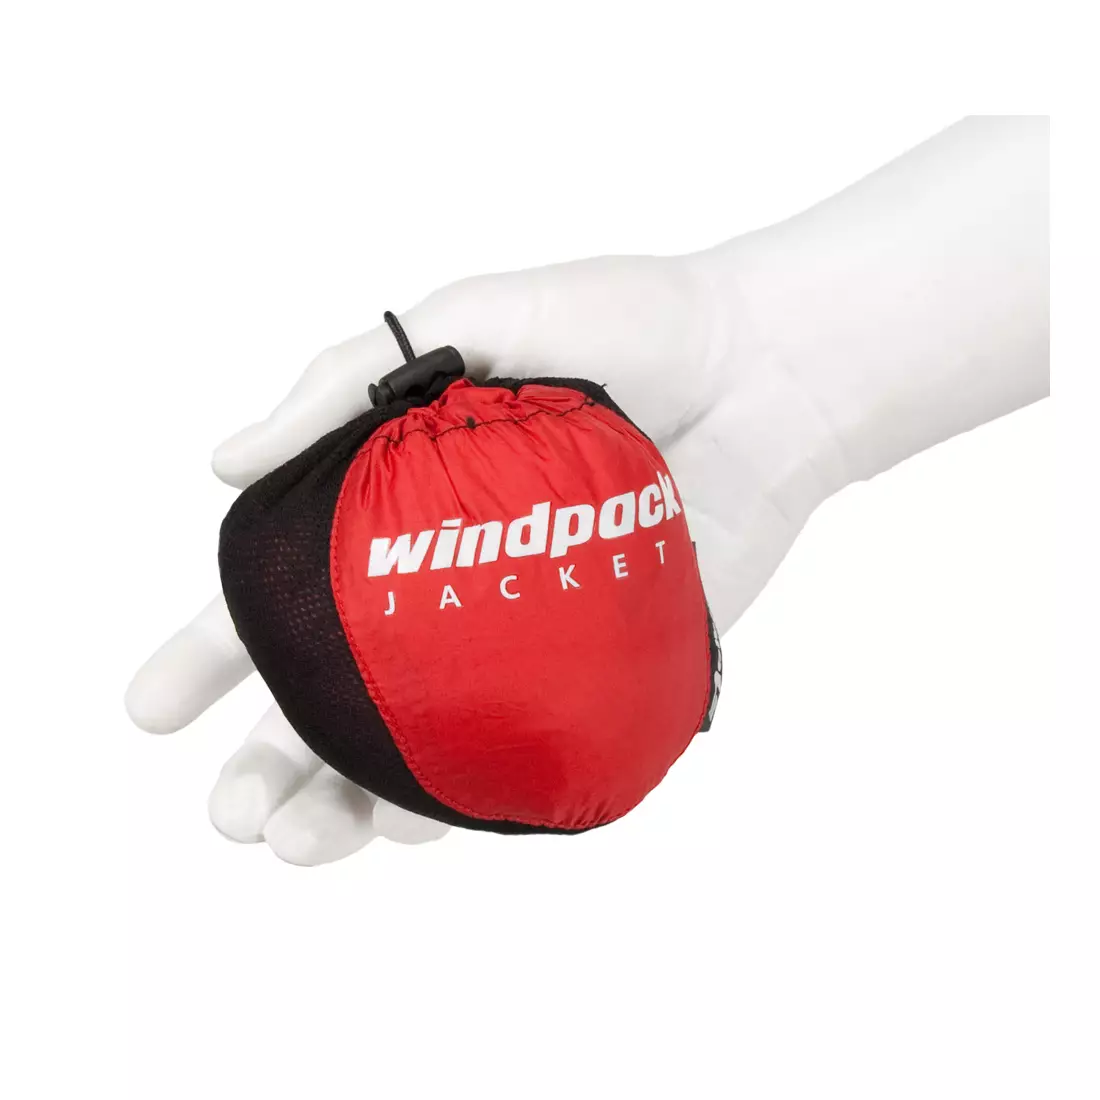 NEWLINE WINDPACK JACKET - ultra-light sports windbreaker 14176-040, color: Red